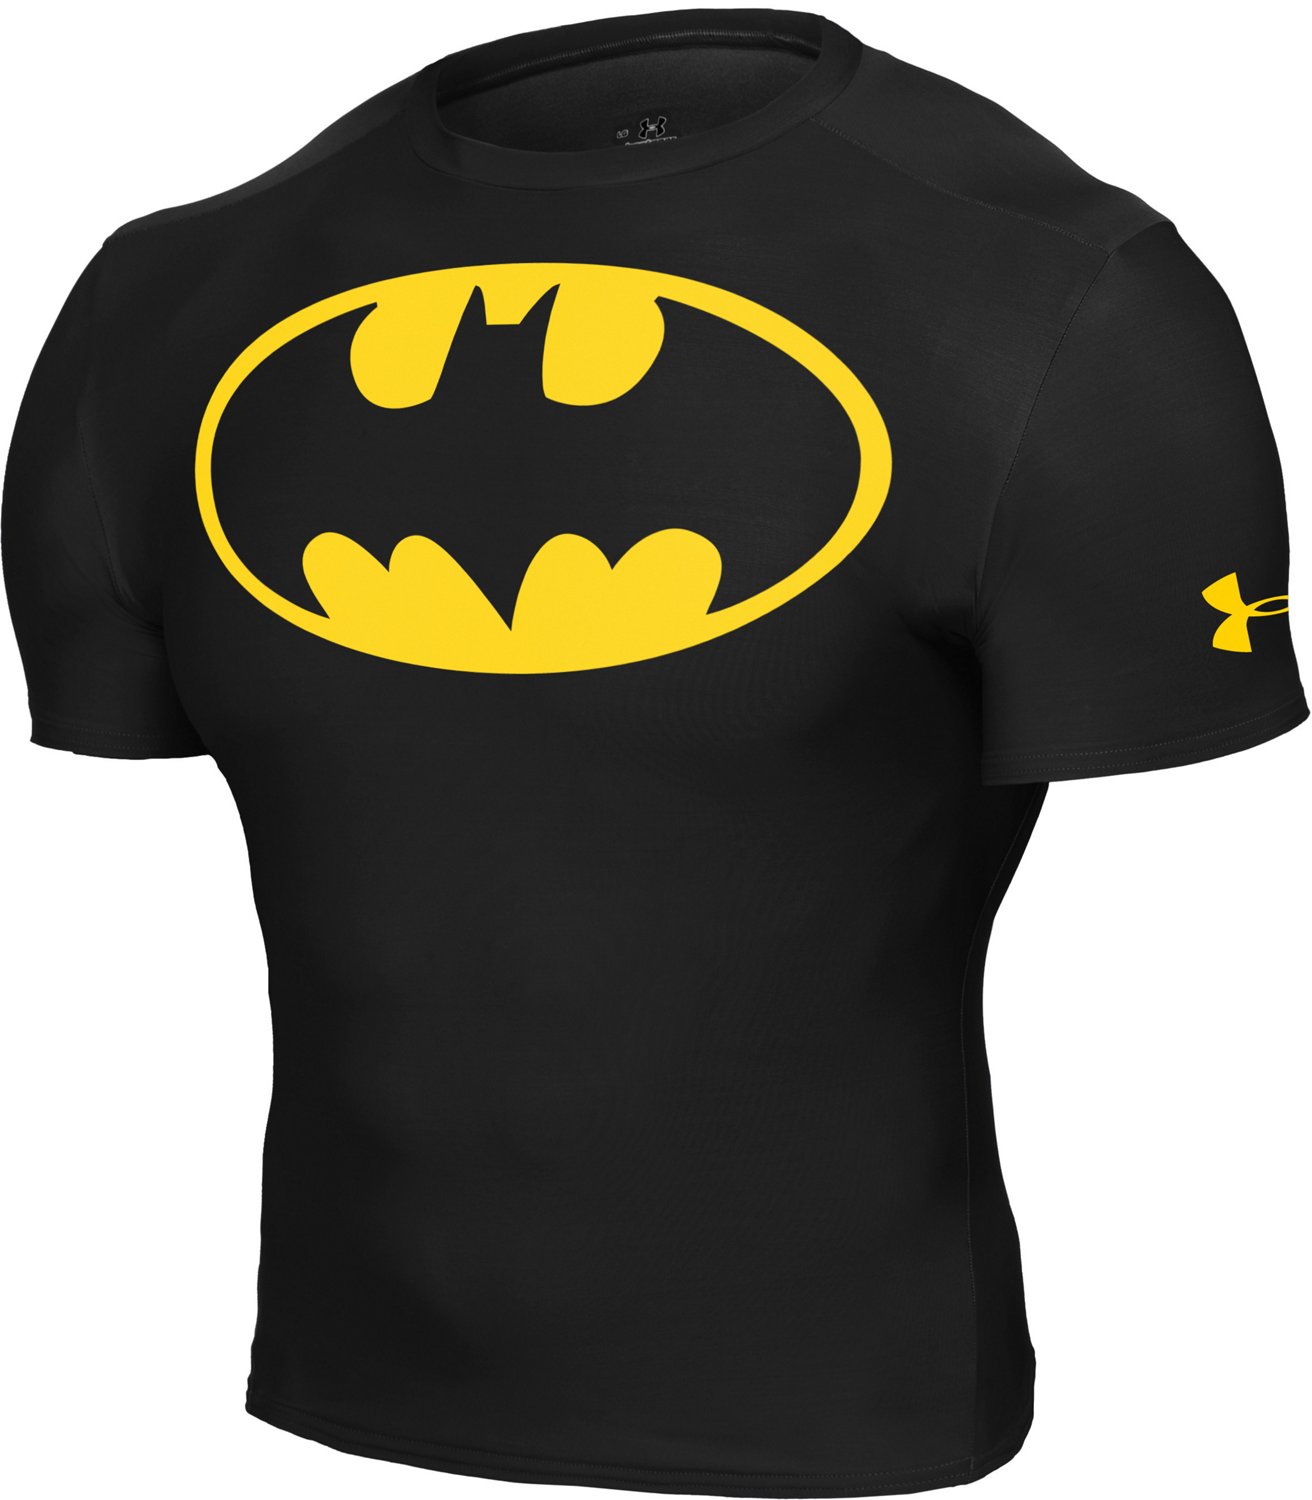 Academy - Under ArmourÂ® Men's Alter Ego Batman T-shirt